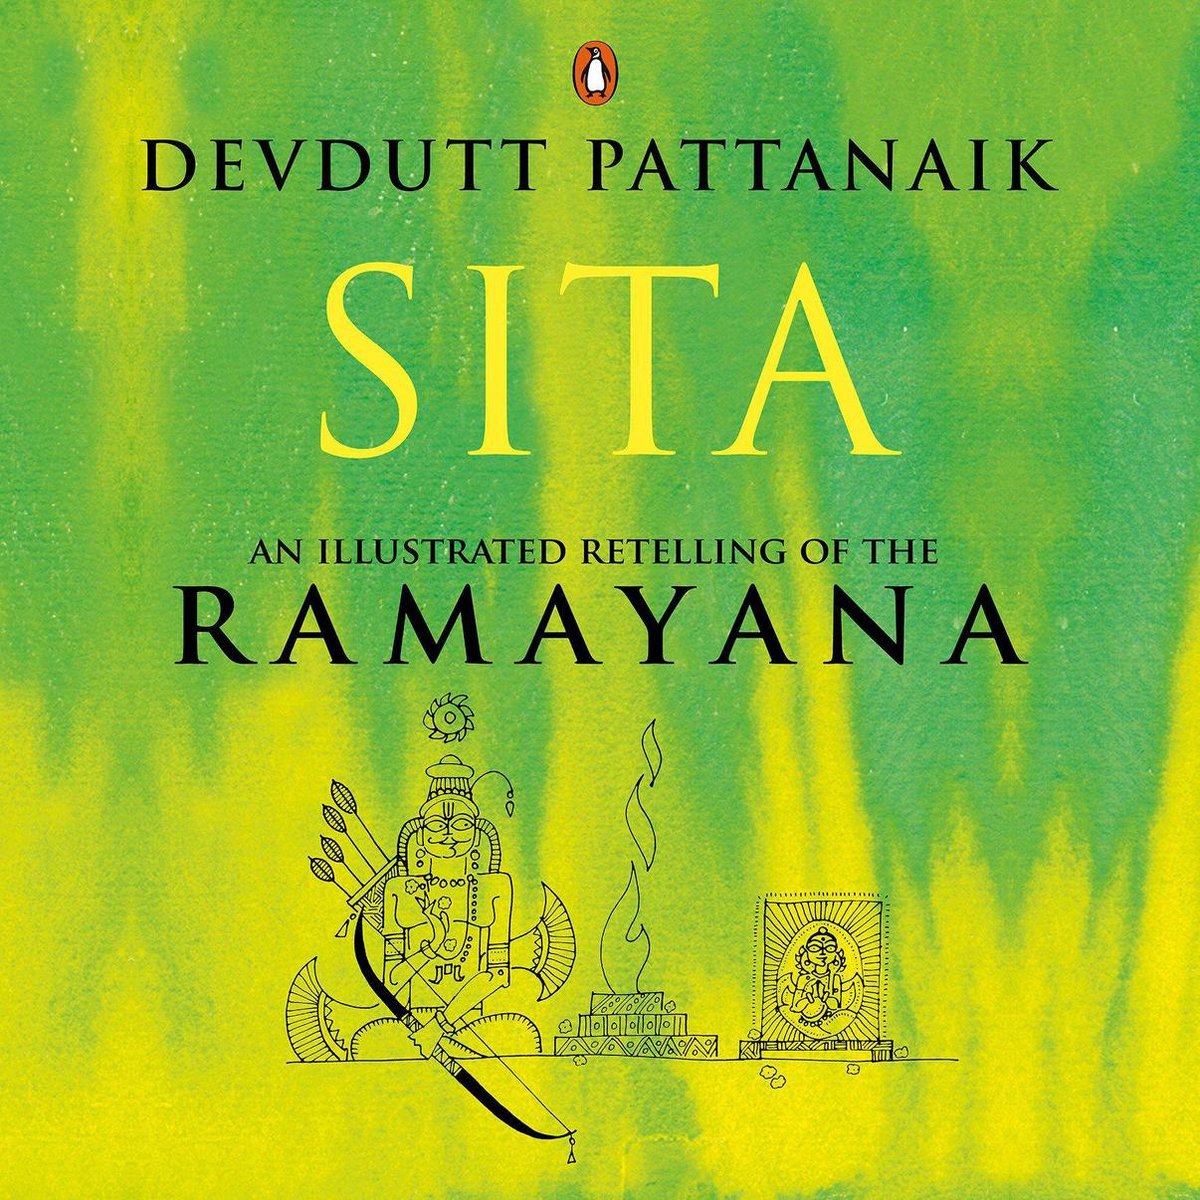 Sita: An Illustrated Retelling of the Ramayana - Devdutt Pattanaik